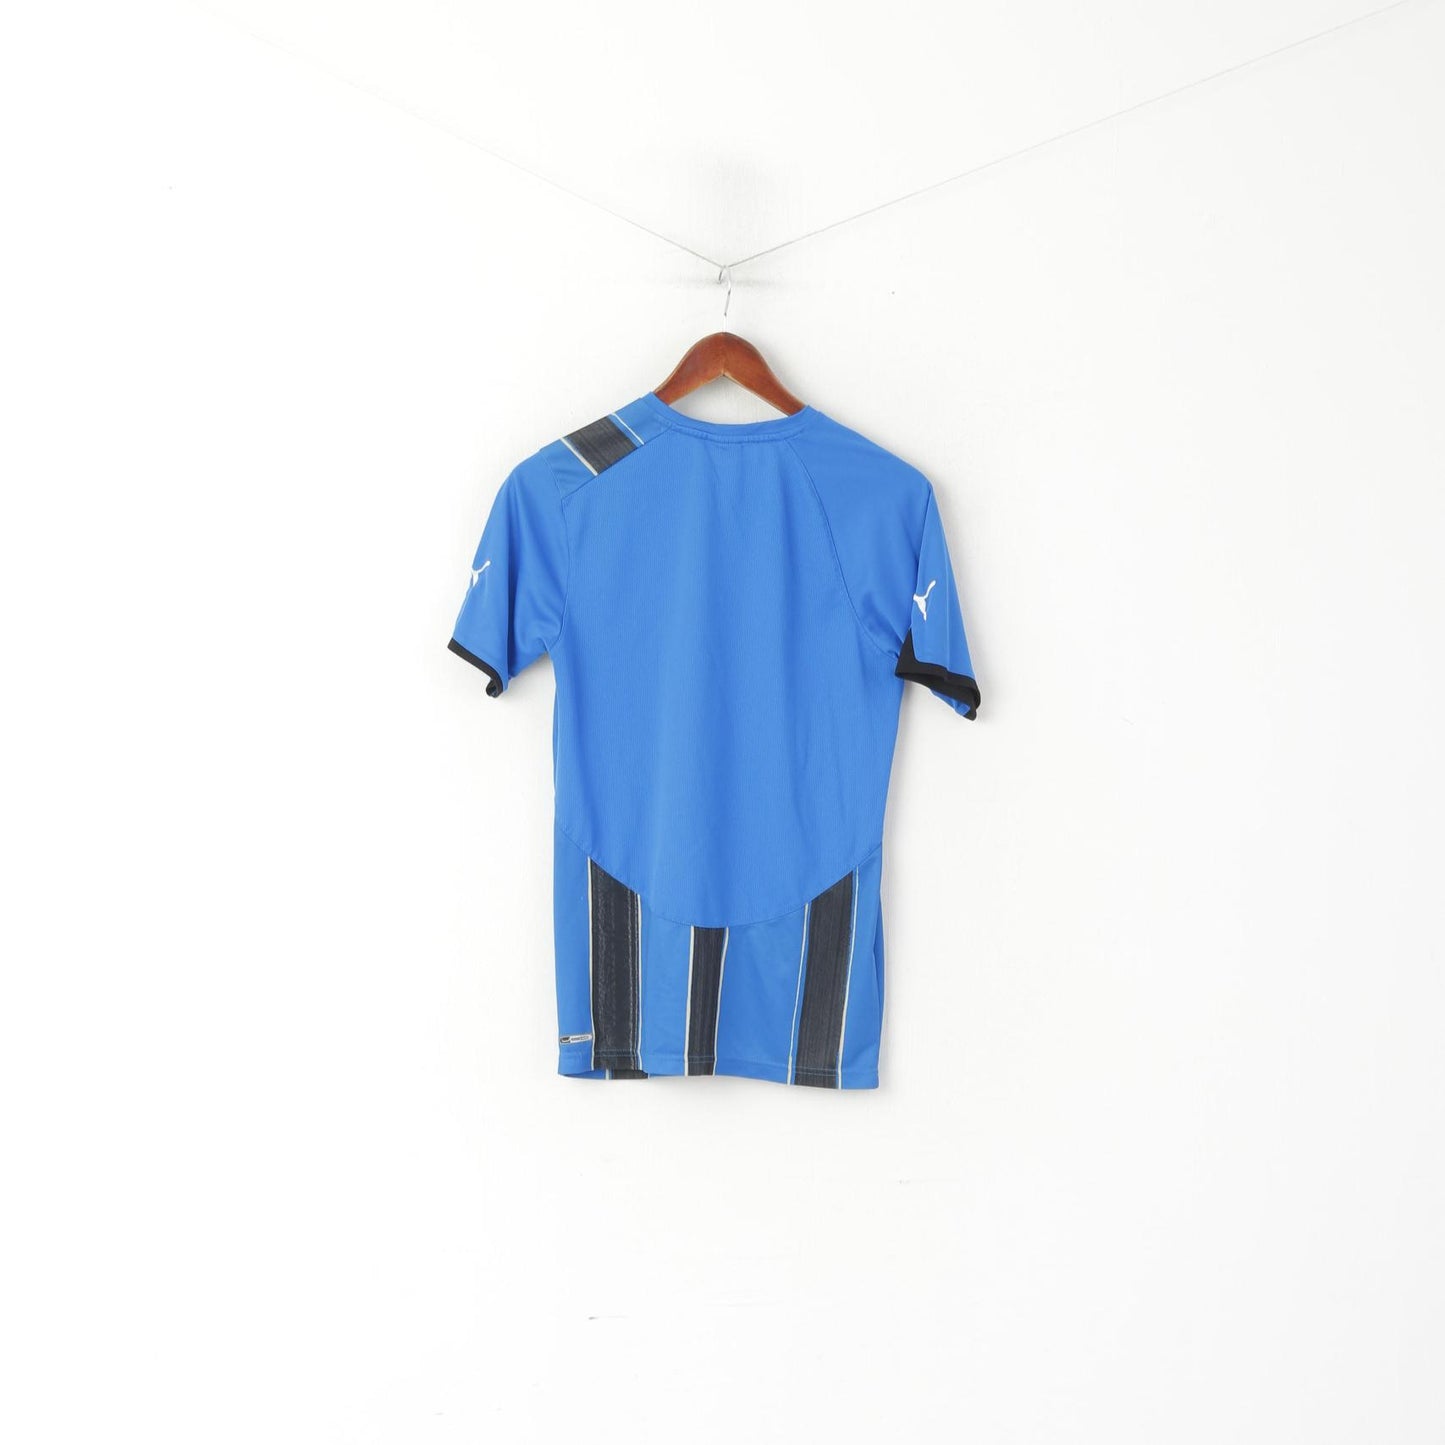 Puma Men S Shirt Blue Club Brugge KV Football Sportswear Jersey Top